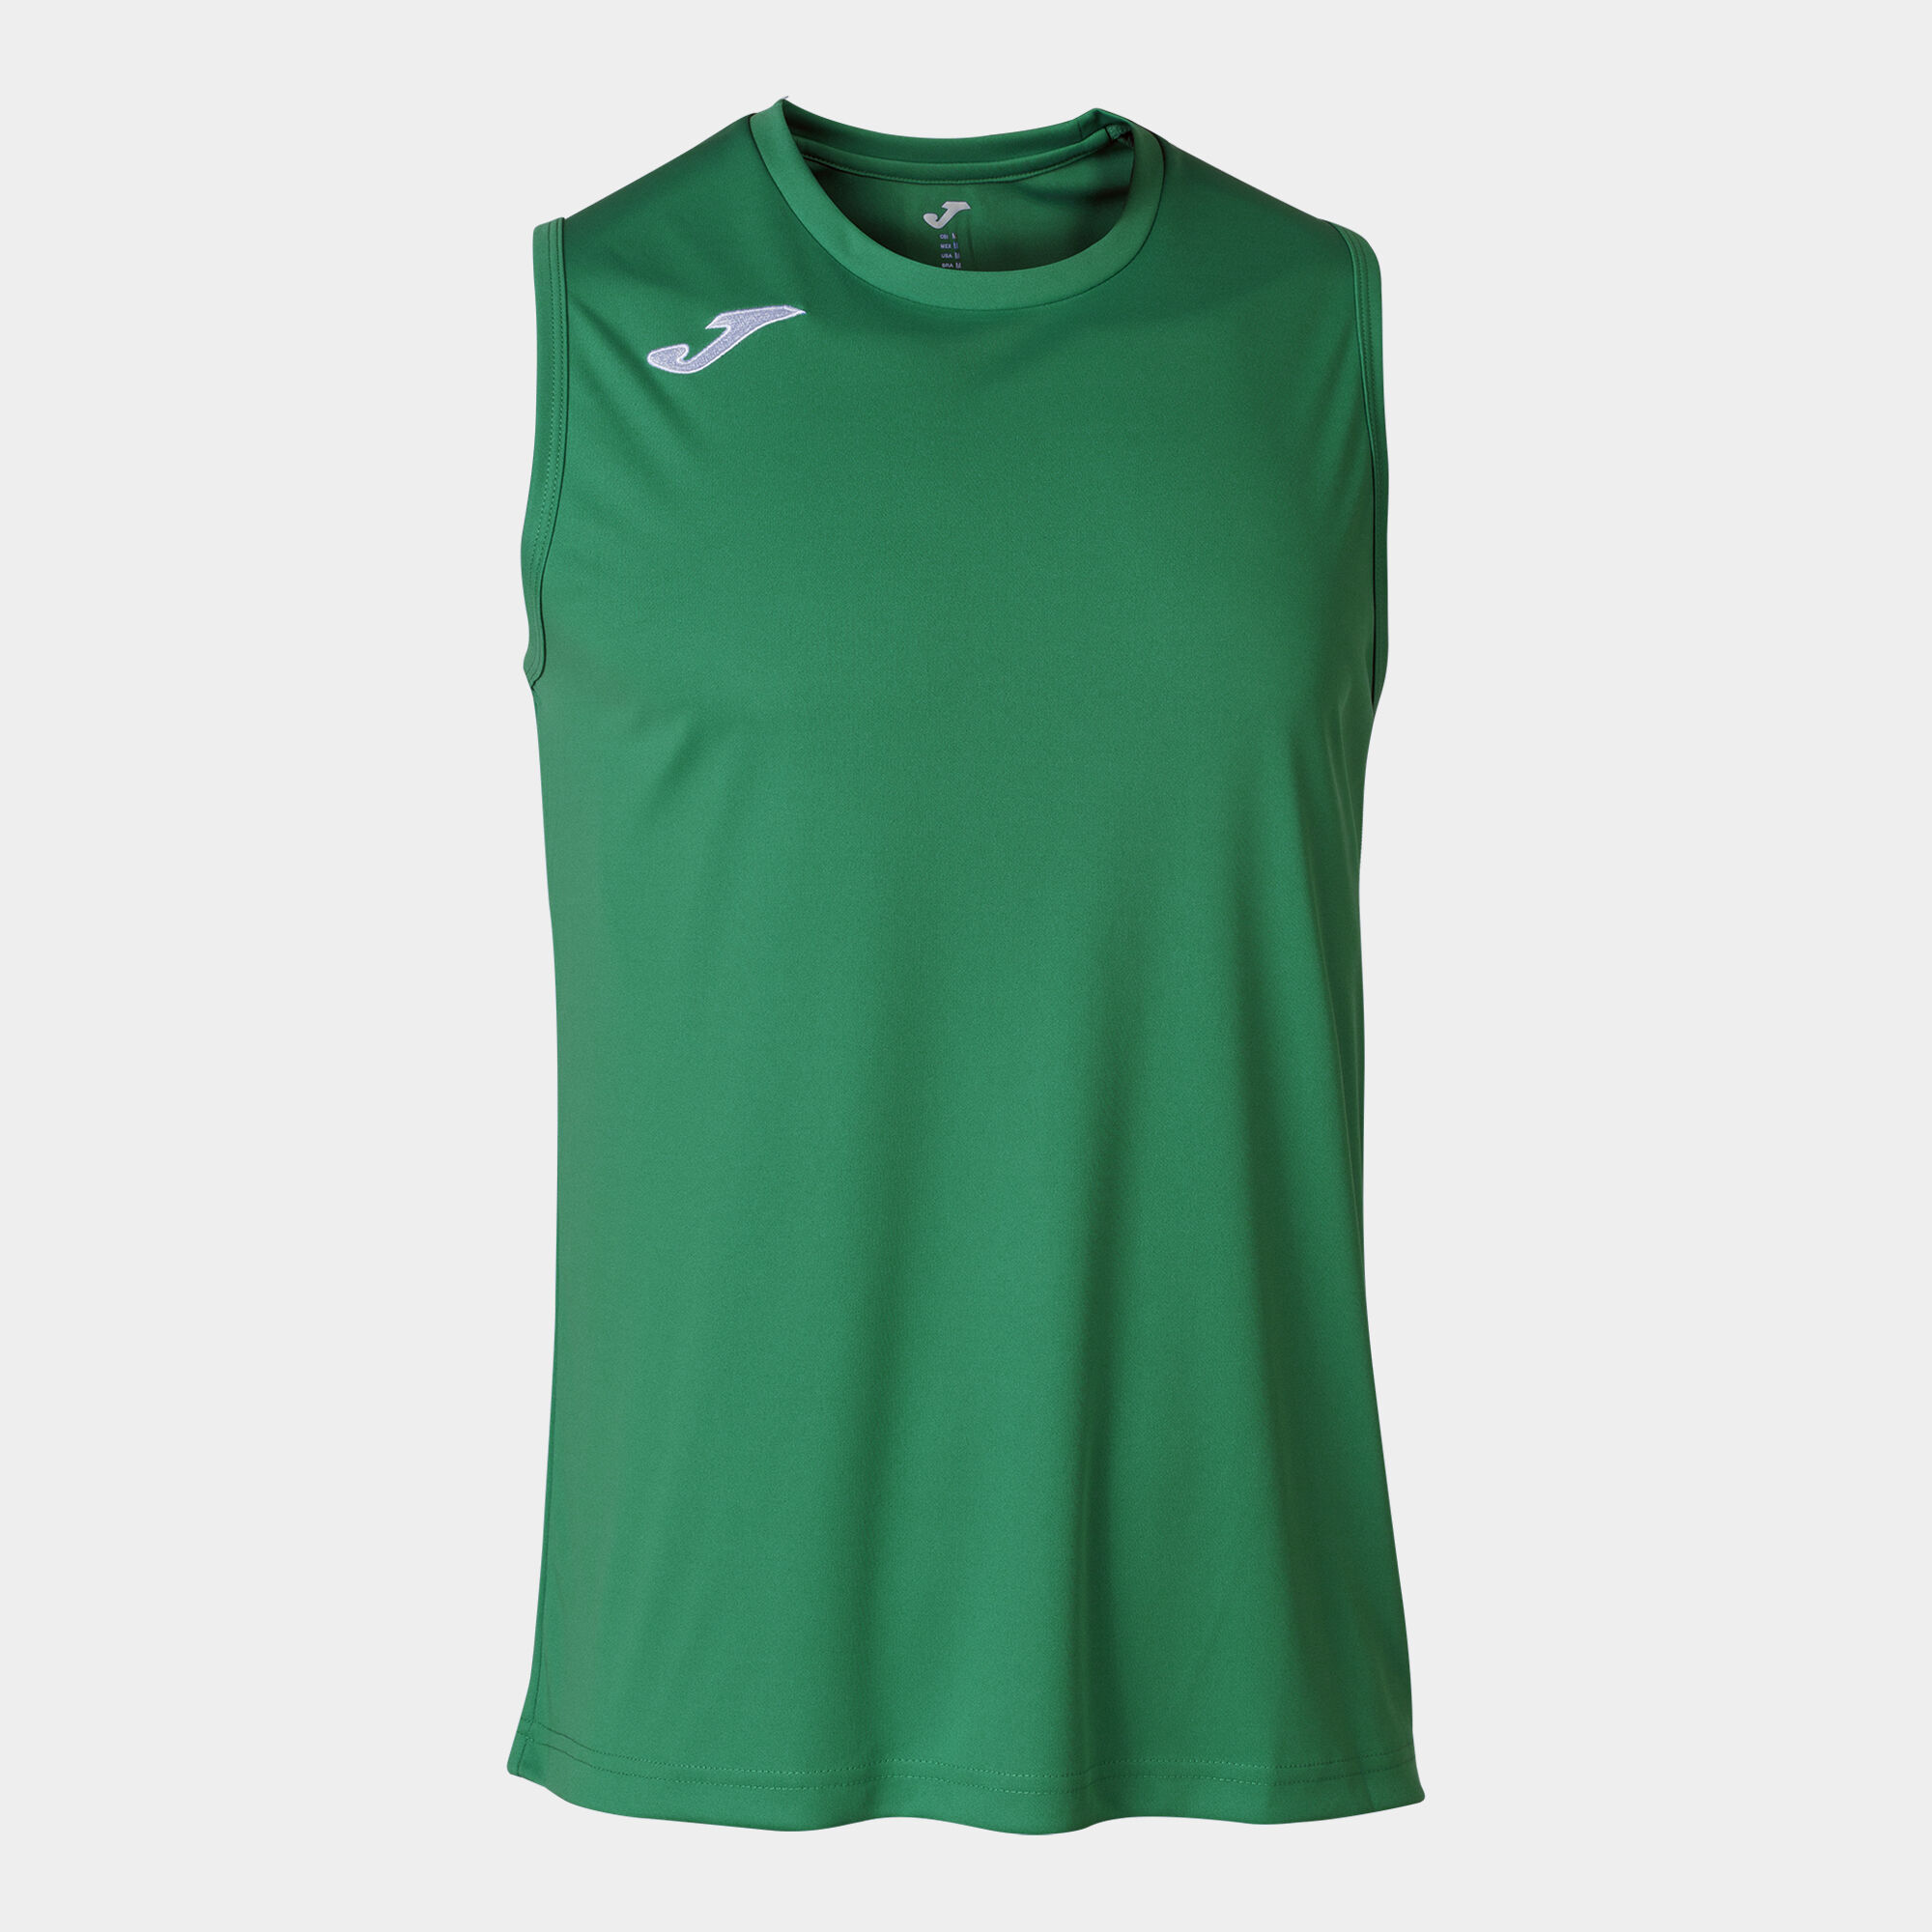 Camiseta sin mangas hombre Combi Basket verde